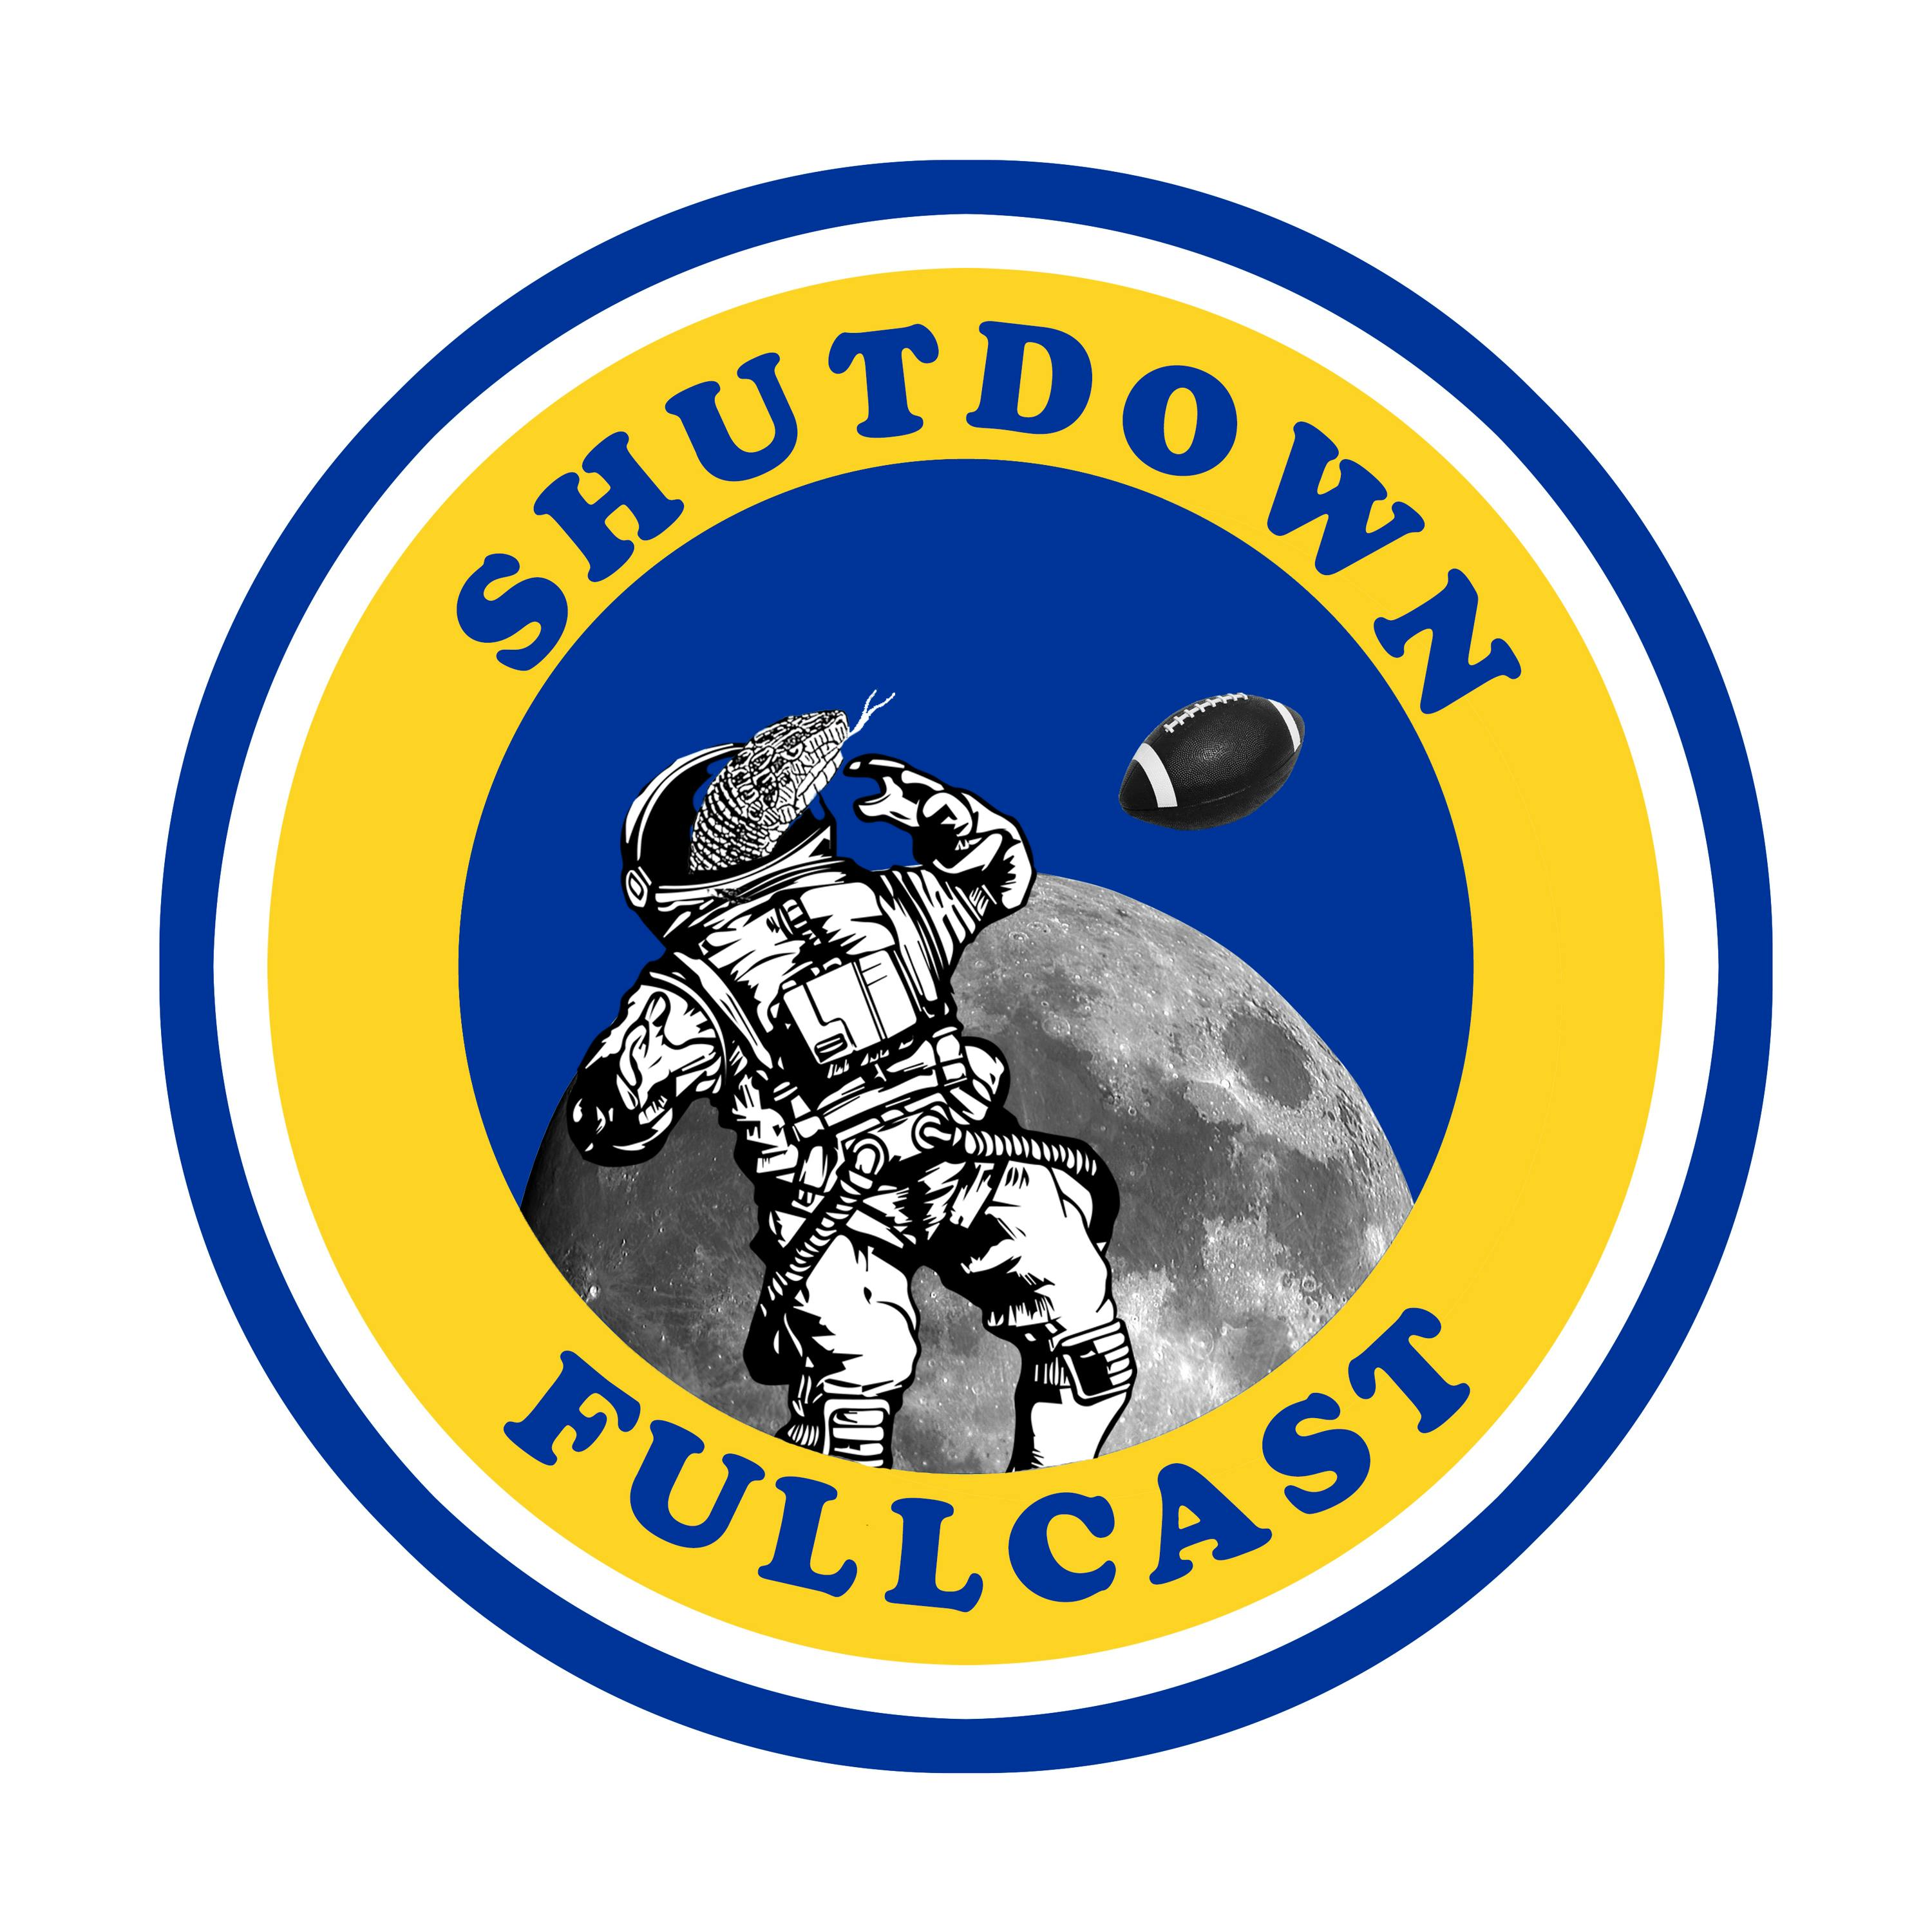 Shutdown Fullcast 40 for 40: The 2017 Liberty Bowl